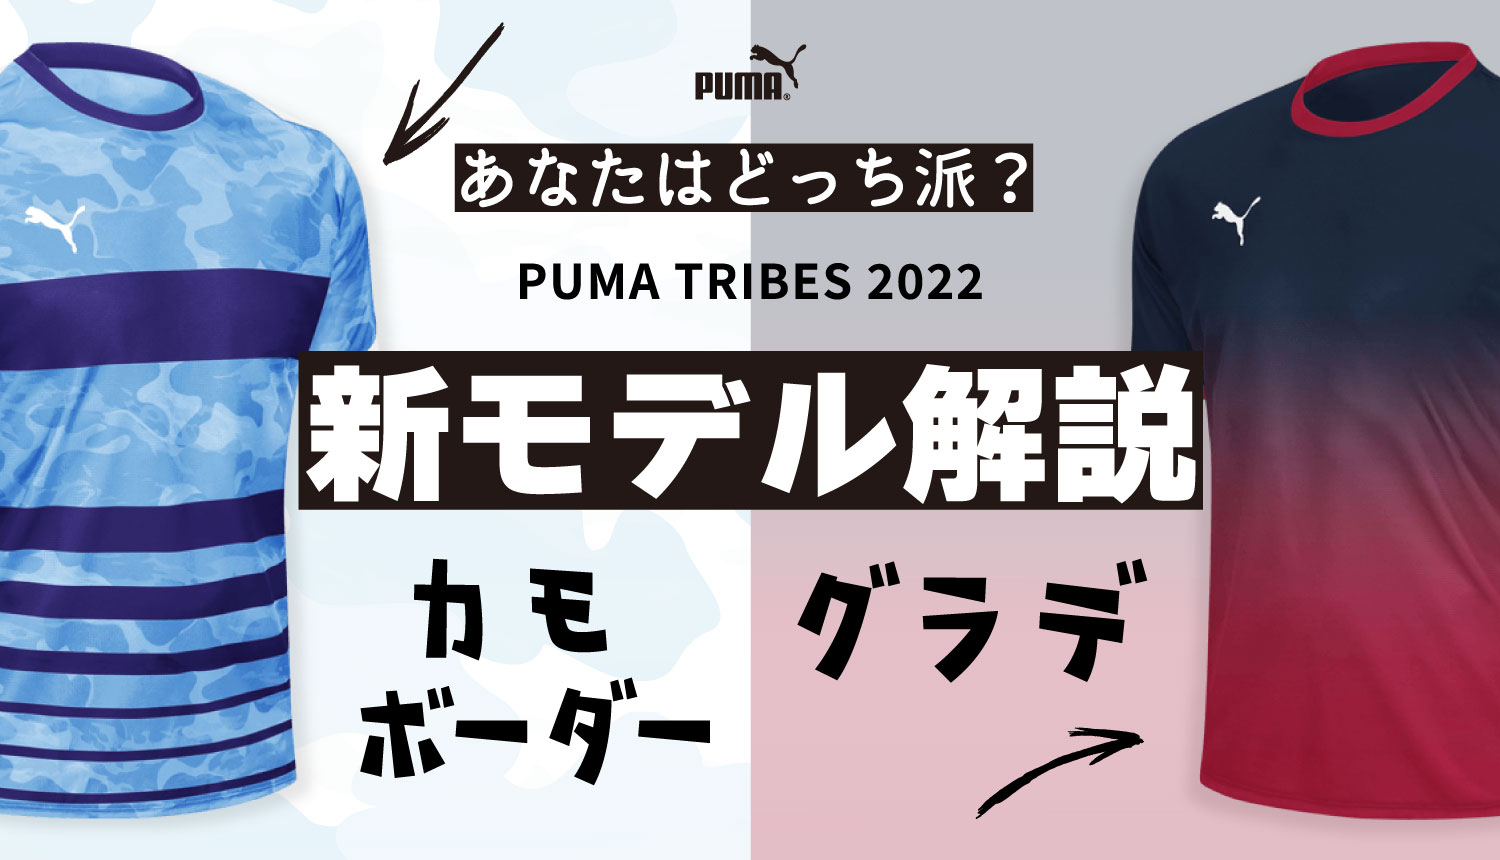 PUMA TRIBES 2022